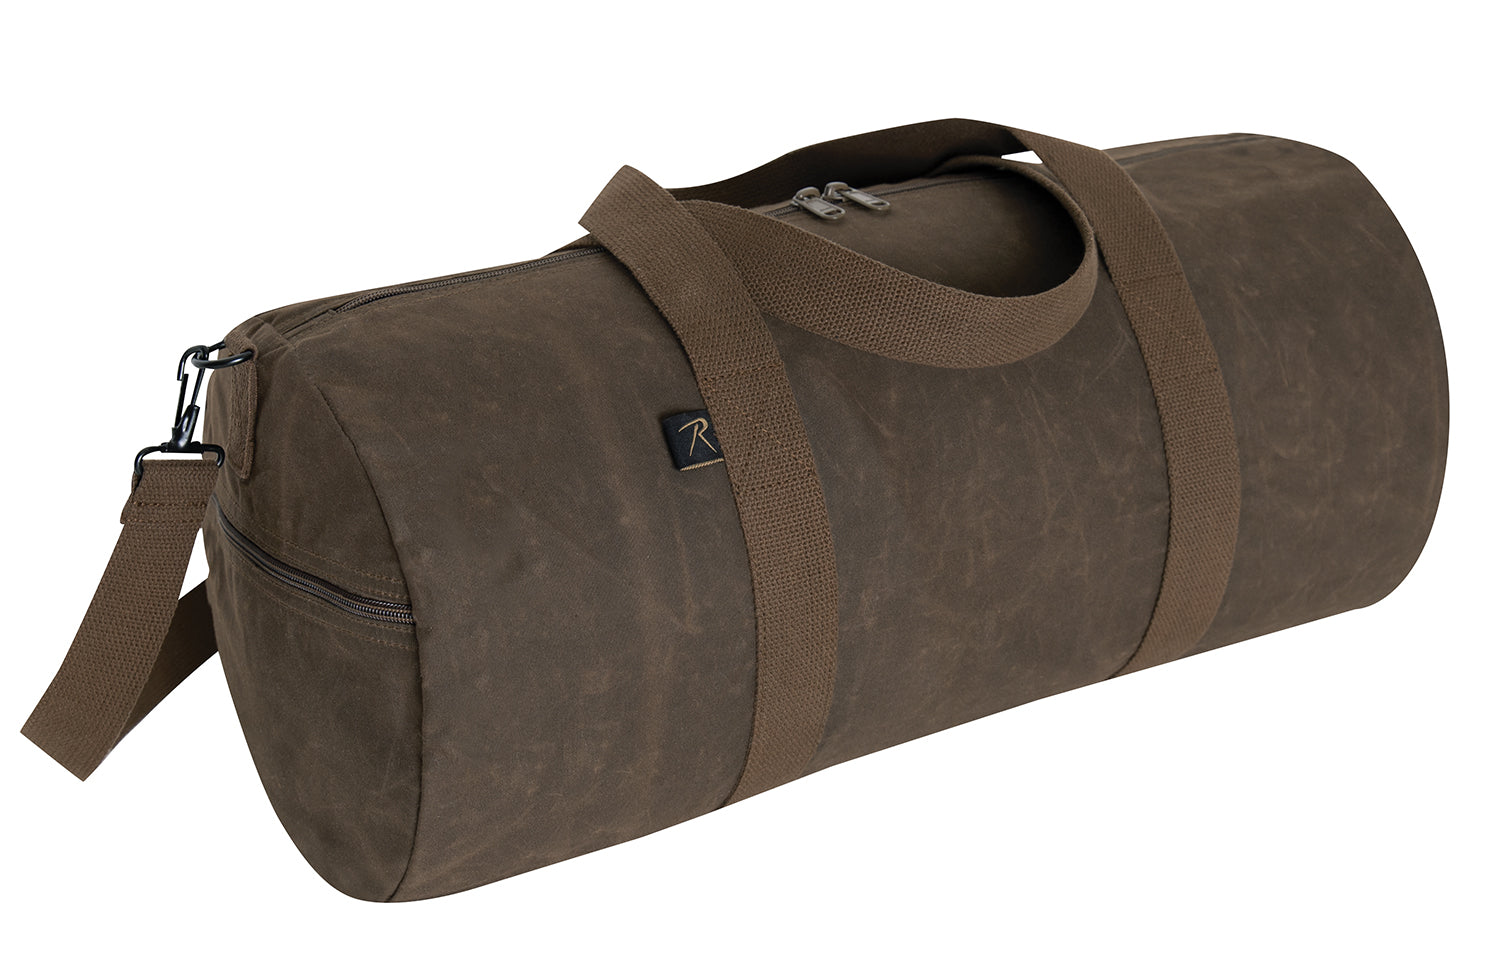 Milspec Waxed Canvas Shoulder Duffle Bag - 24 Inch Canvas Bags MilTac Tactical Military Outdoor Gear Australia